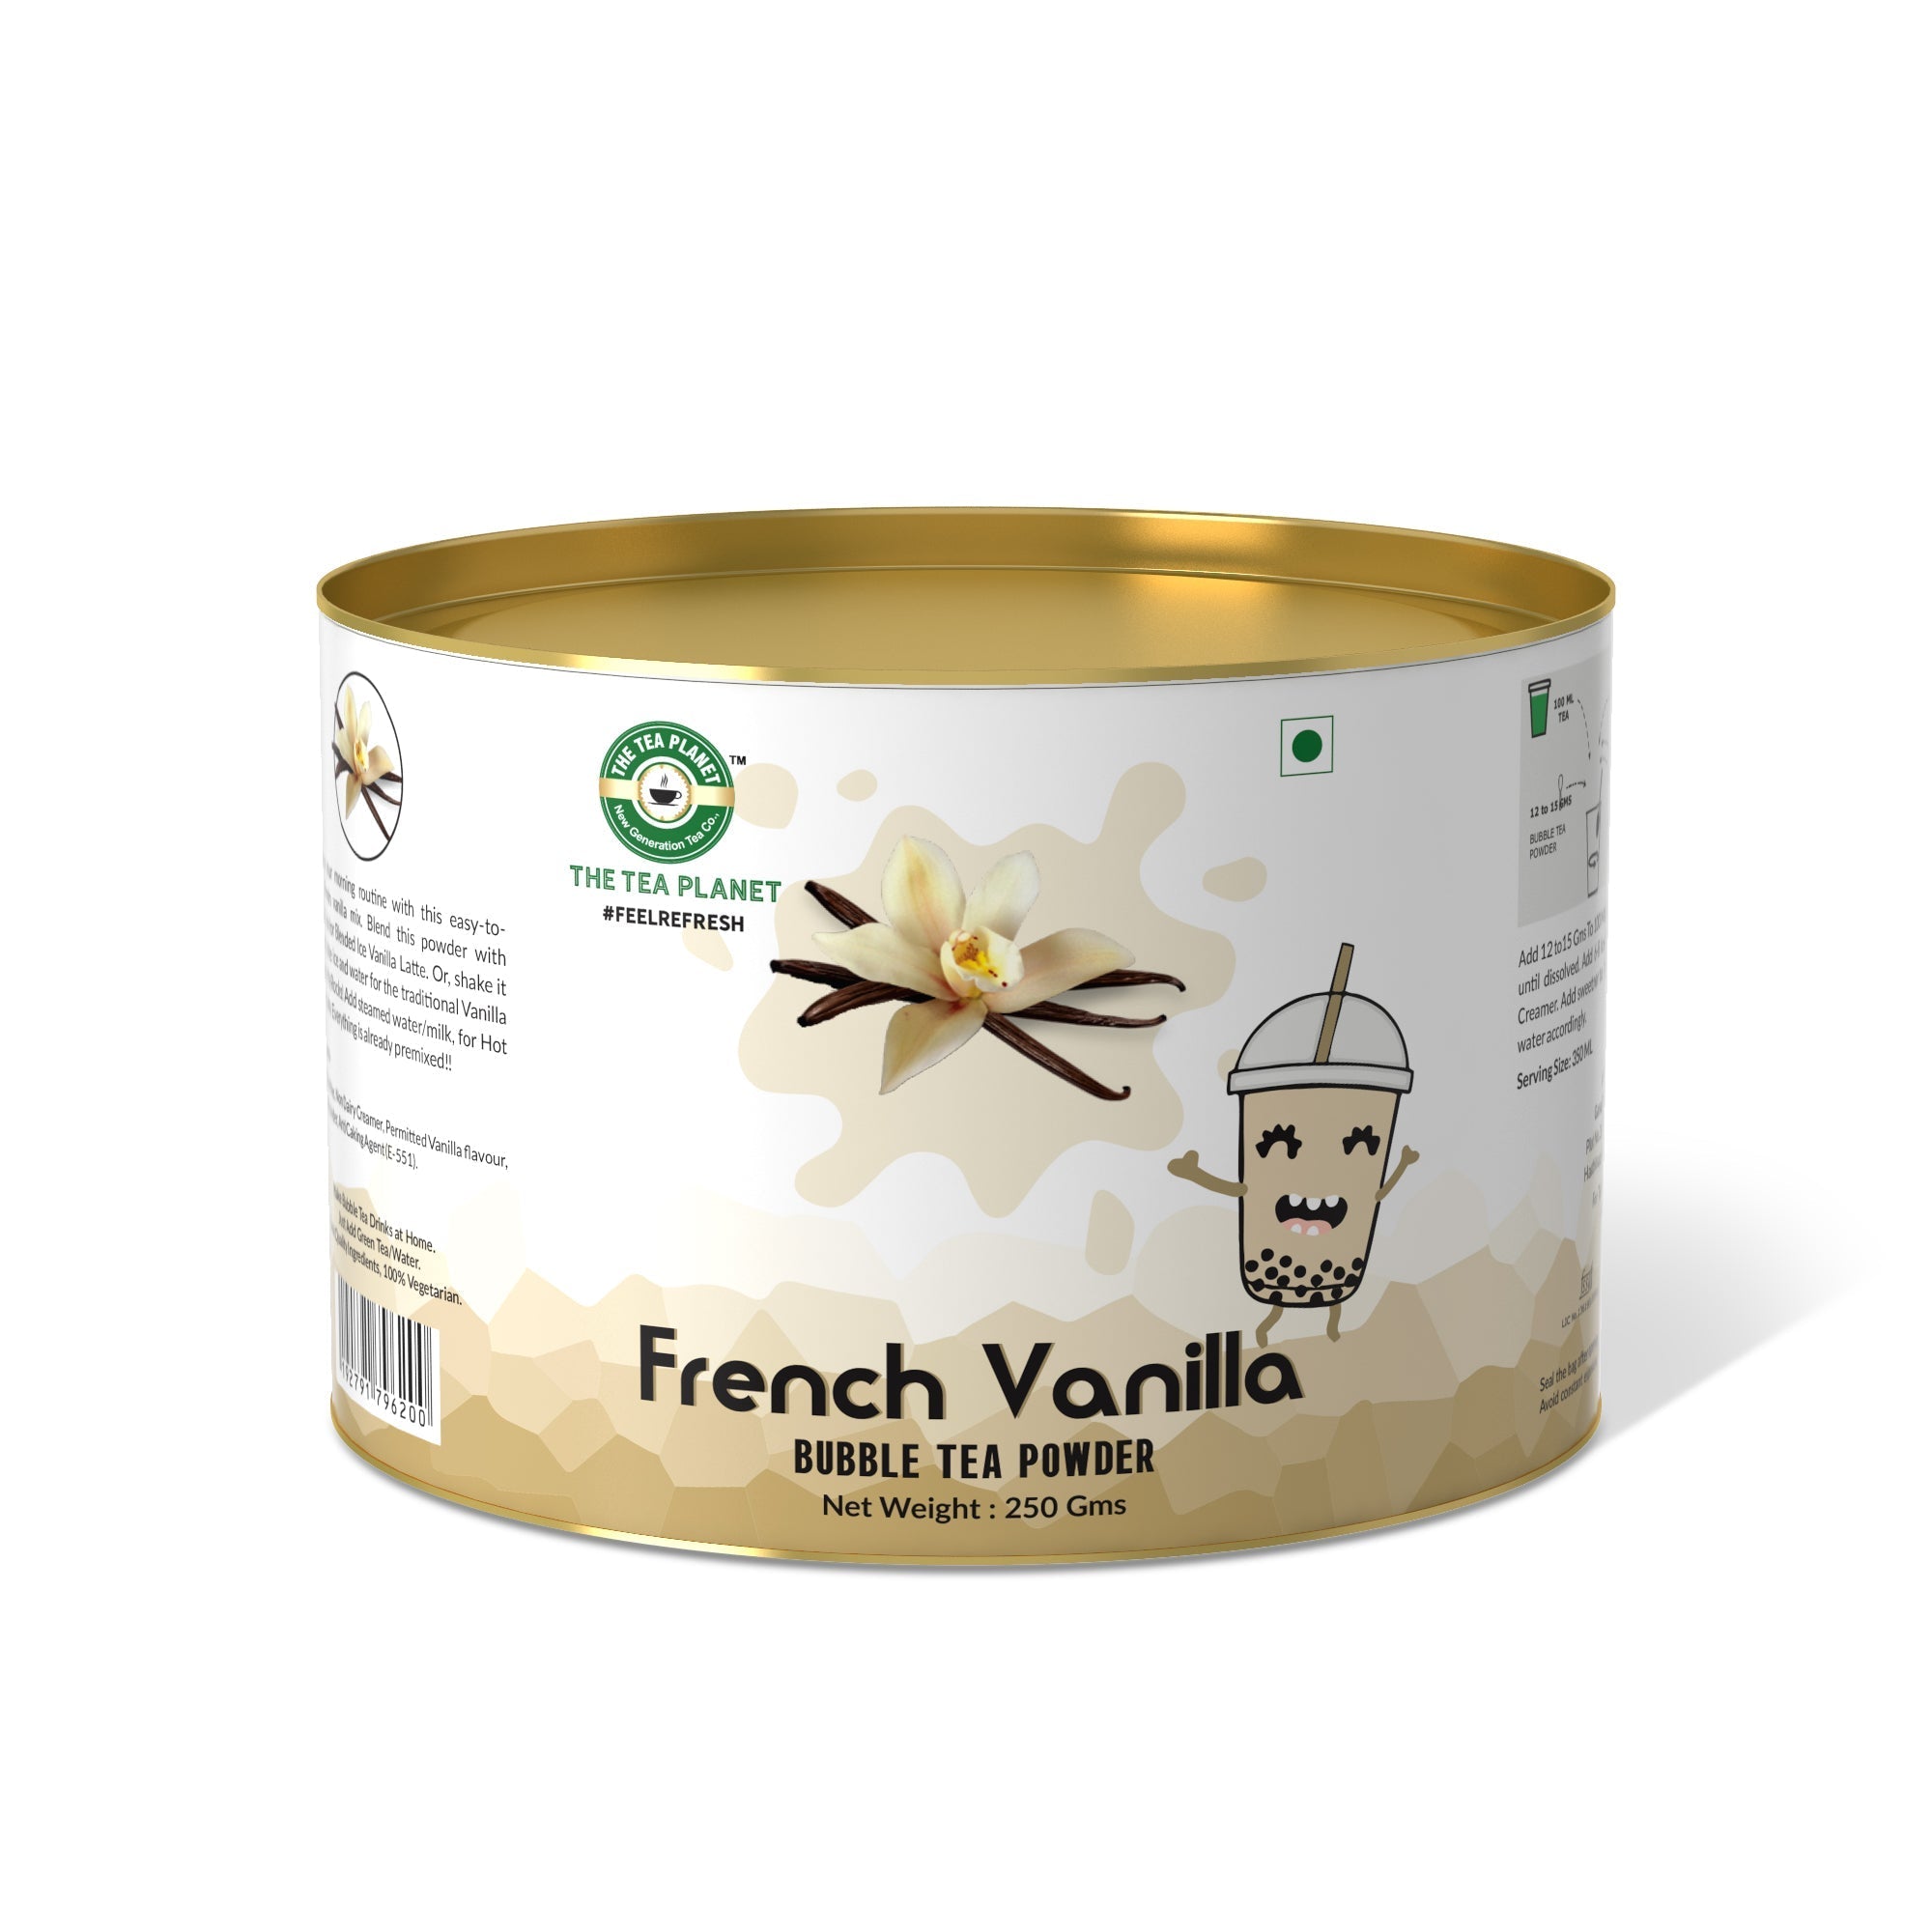 French Vanilla Bubble Tea Premix - 400 gms